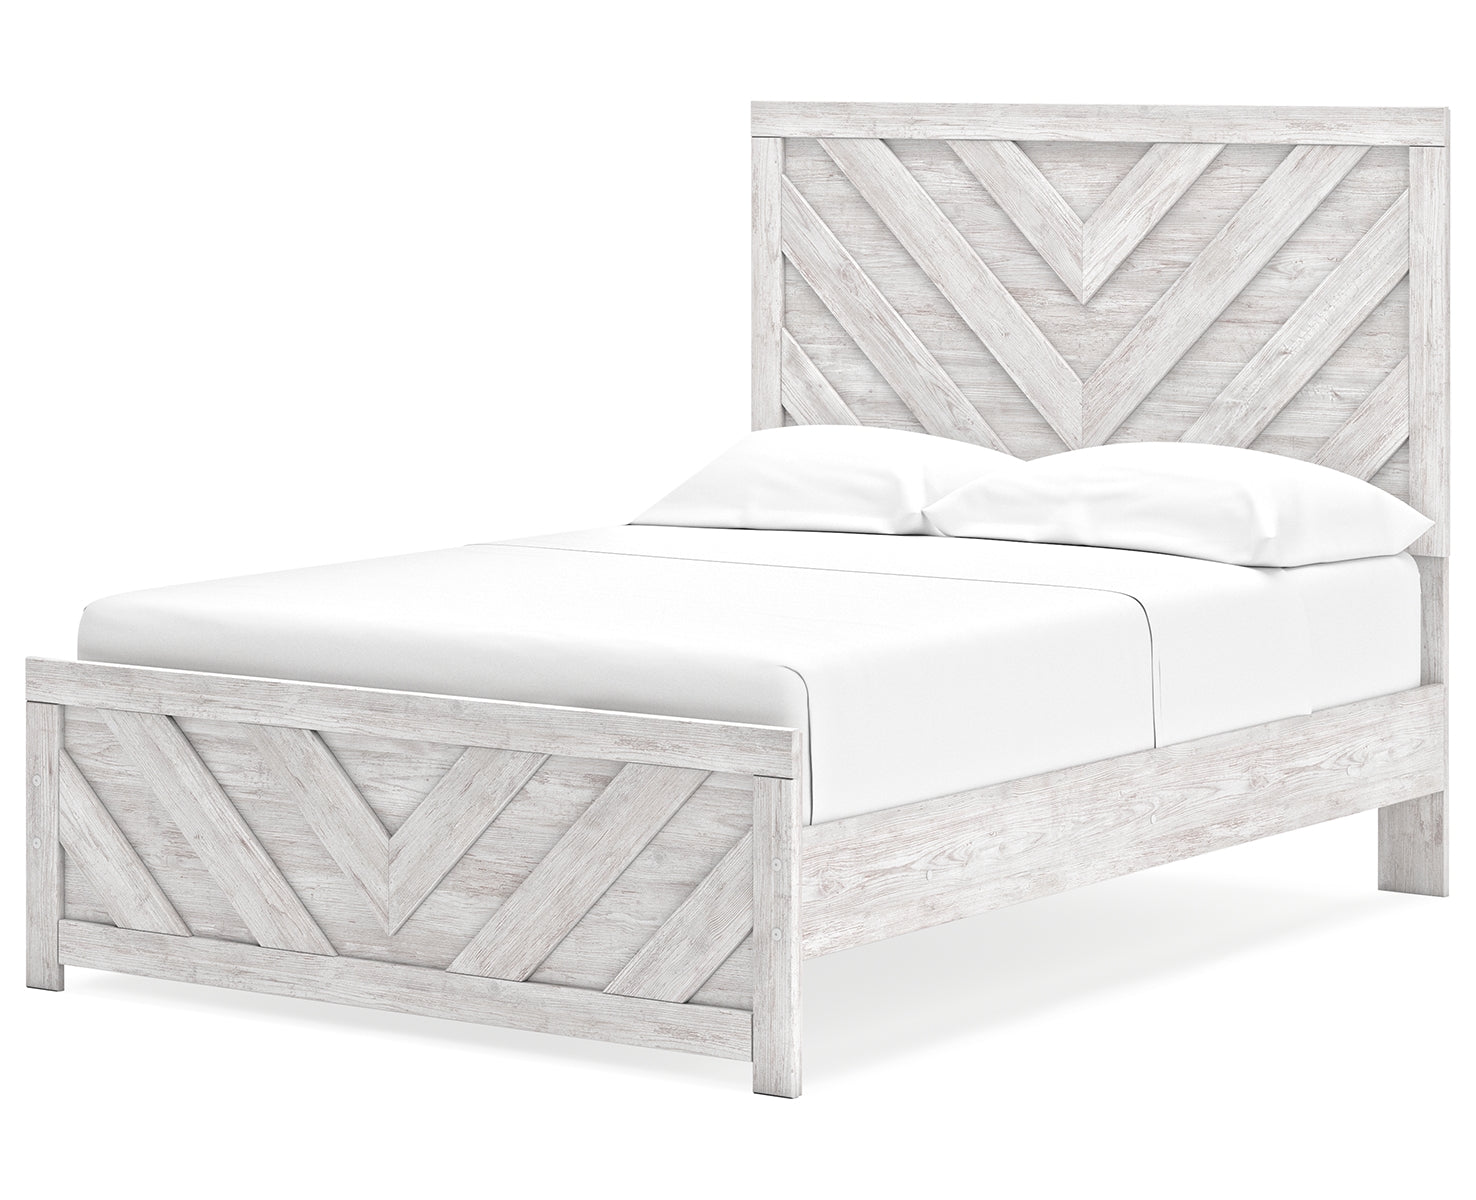 Cayboni Full Panel Bed